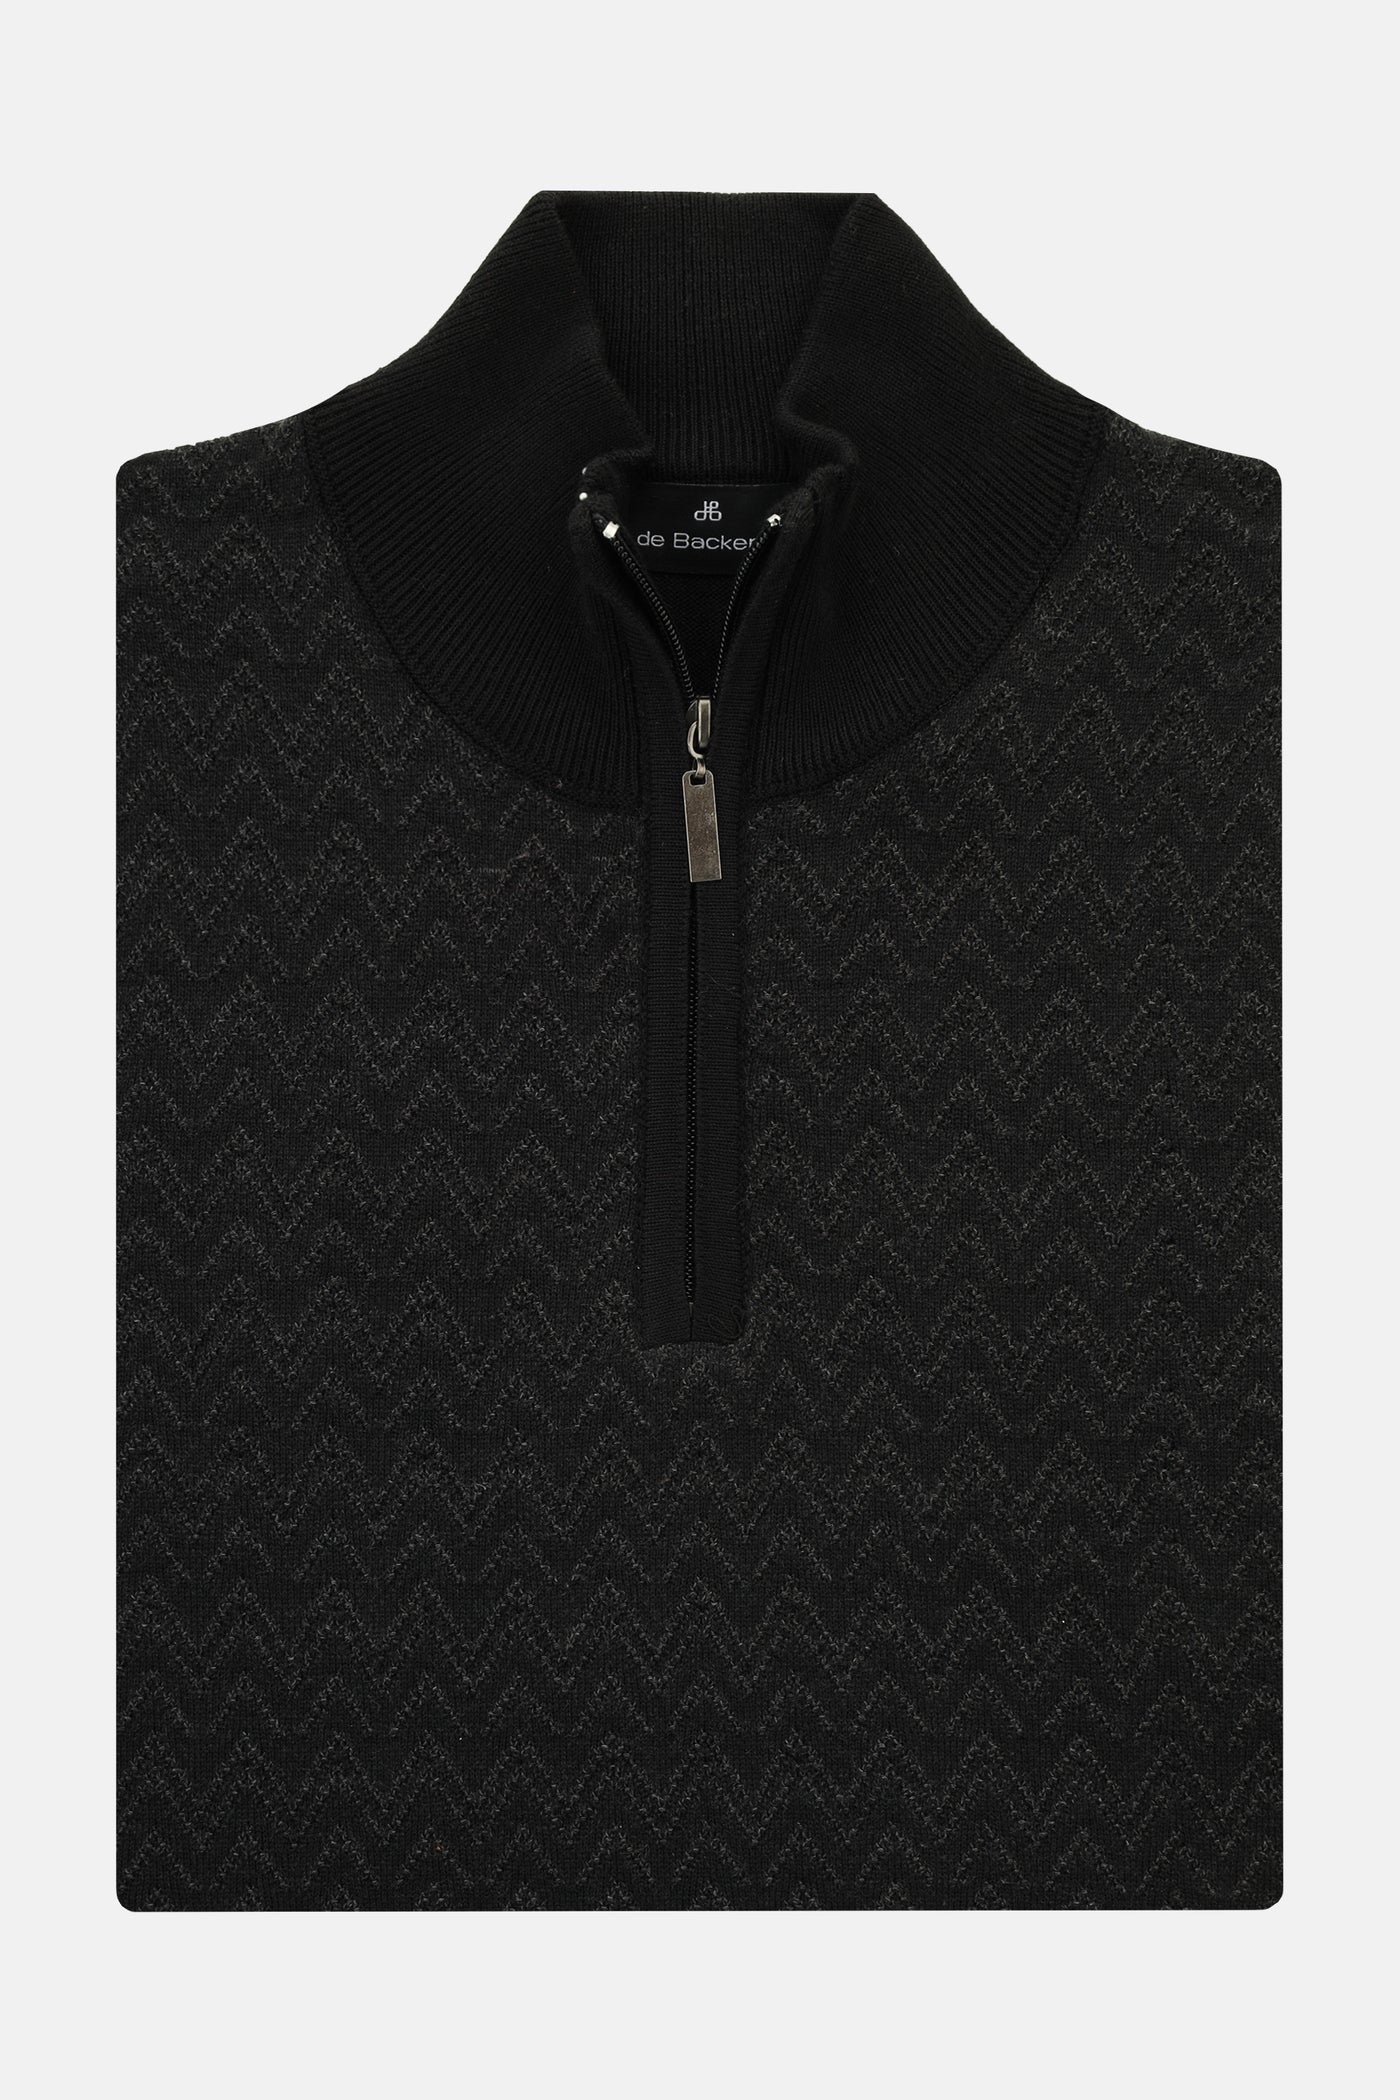 Jacquard Knitted Quarter Zip Black Pullover